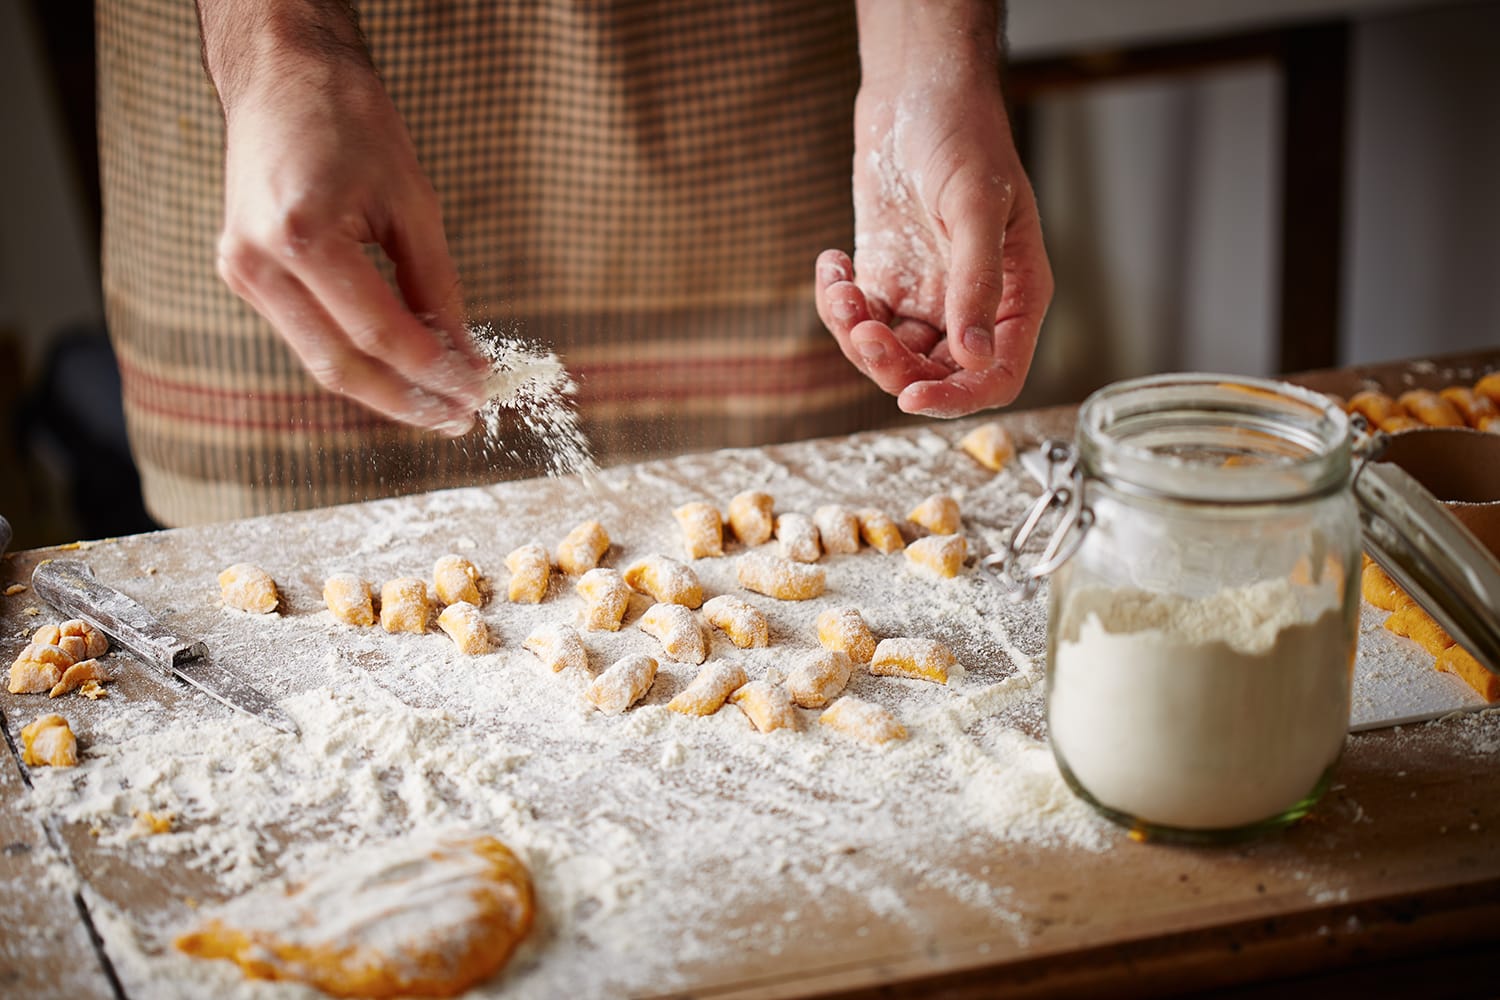 Cook making gnocchi from scratch